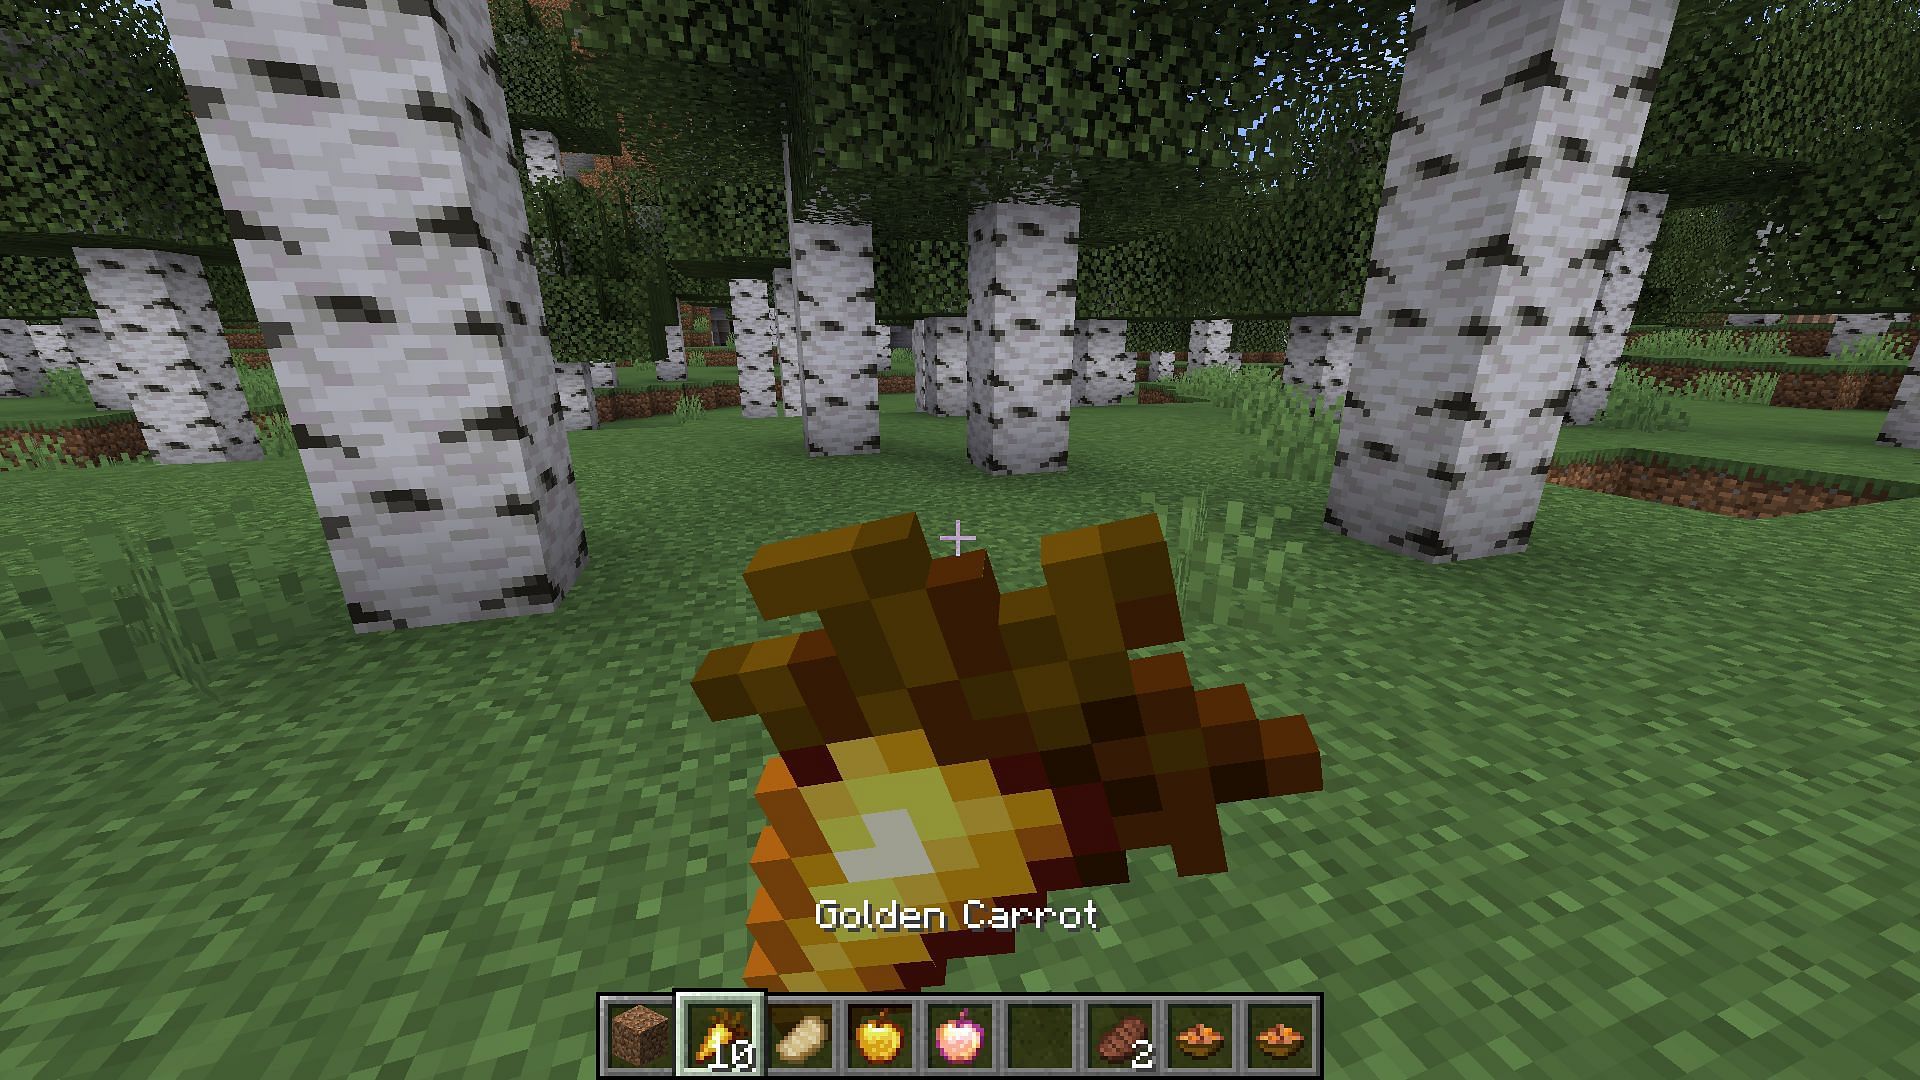 Golden Carrot (Image via Minecraft)